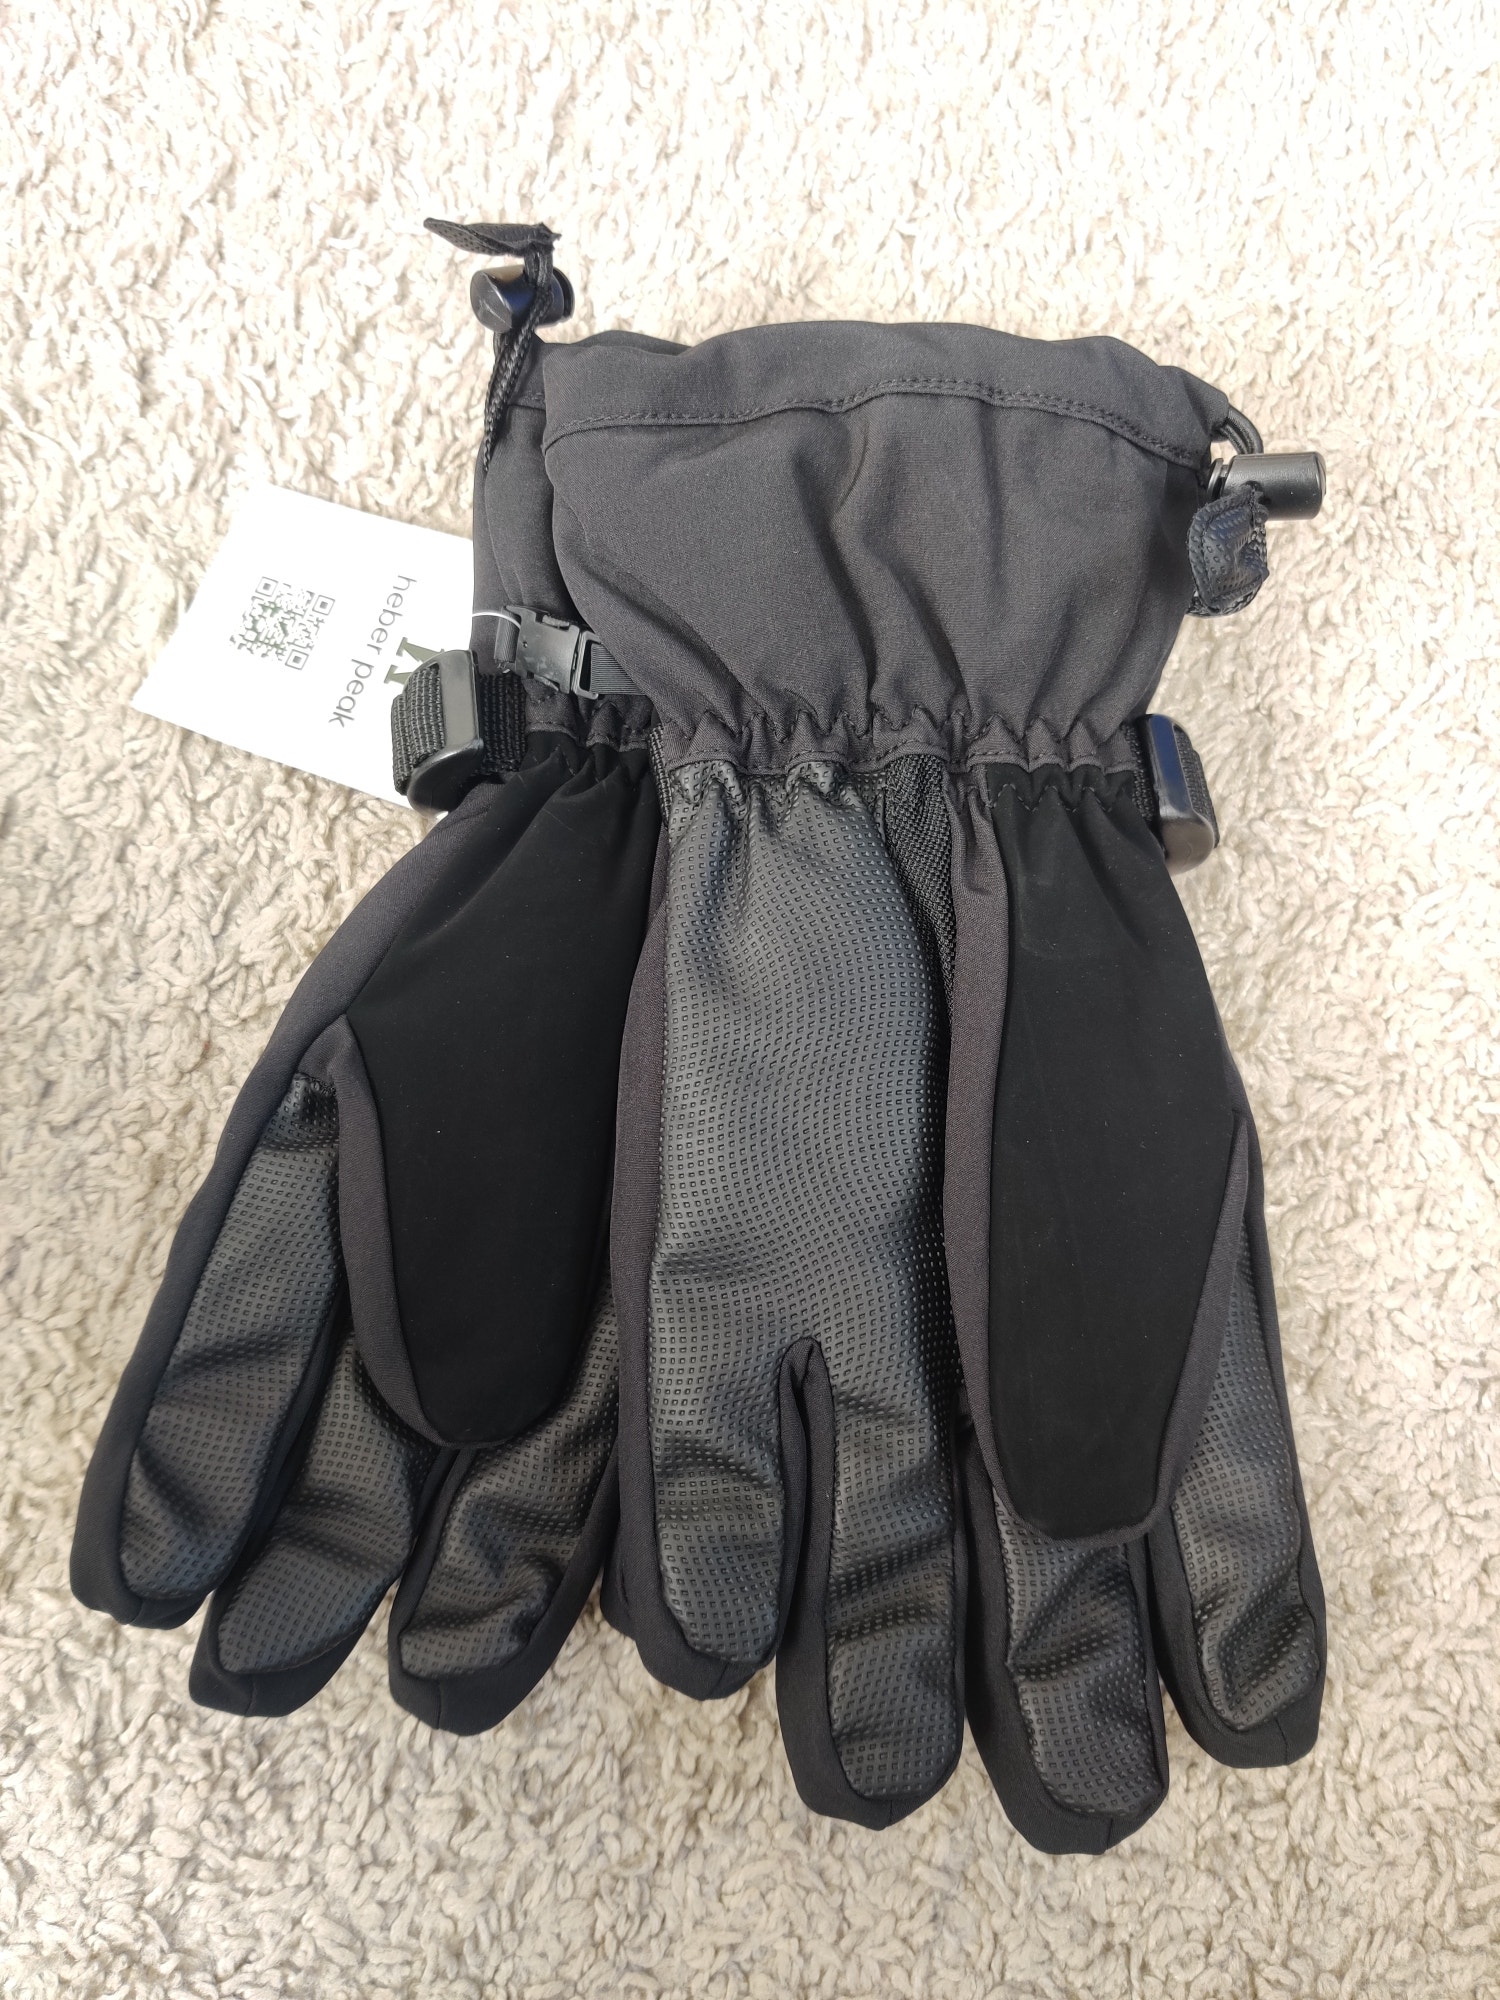 (V) Heber Peak Viggest 5 Finger Glove MEN'S SKI AND SNOW WATERPROOF MITTENS SZ 9 - Picture 5 of 10